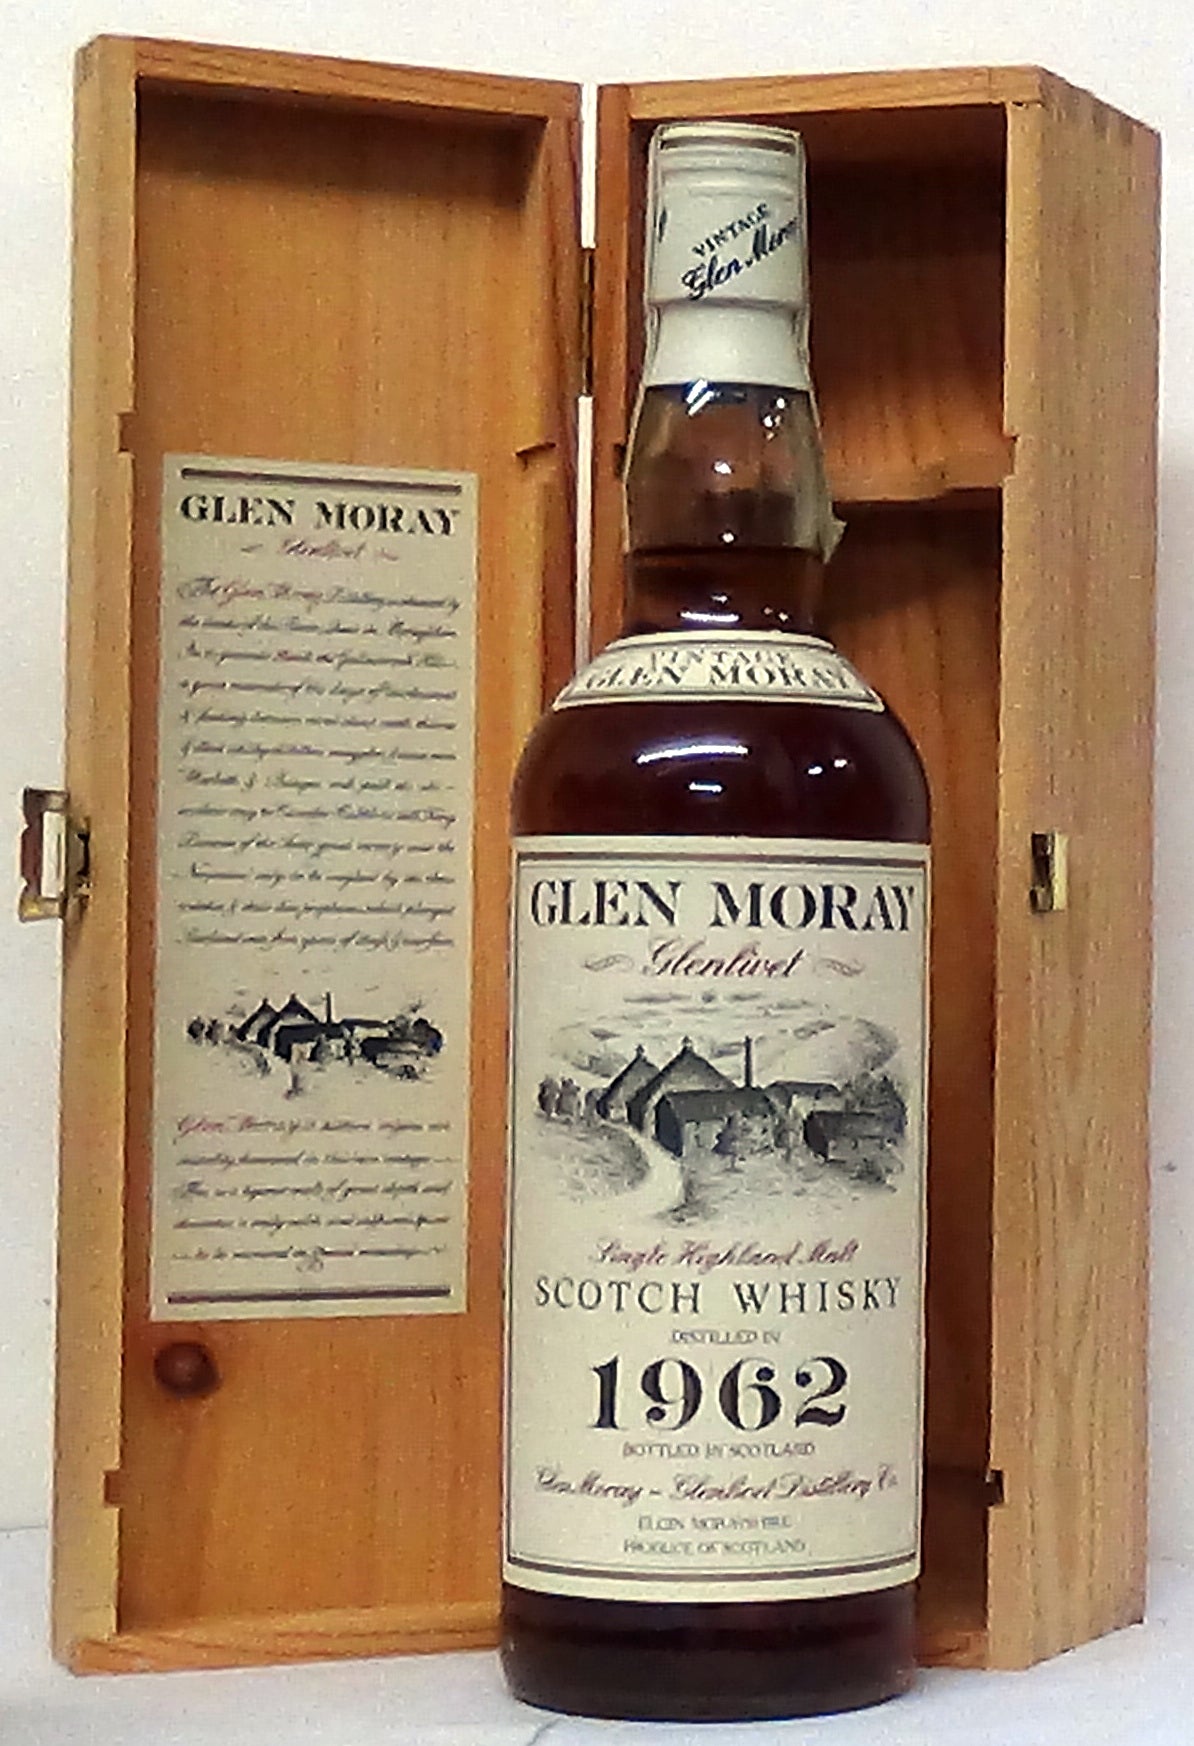 1962 Glen Moray - Glenlivet 27 Year Old Highland Malt - Scottish Whisk